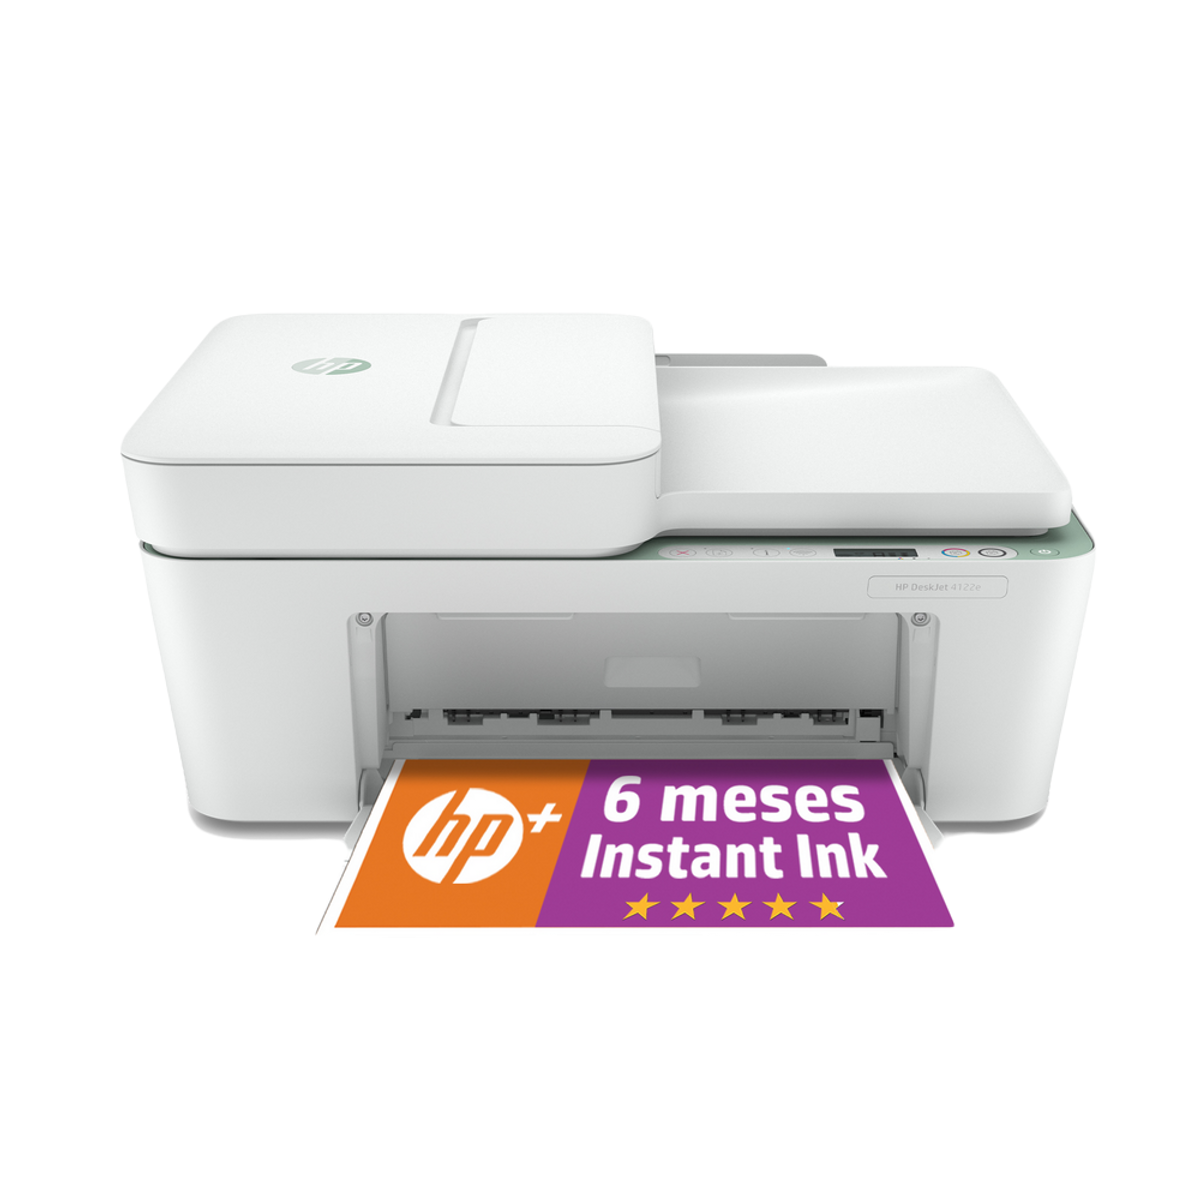 DeskJet All-in-One Multifunktionsgeräte WLAN Printer Tinte und Drucker HP 4122e